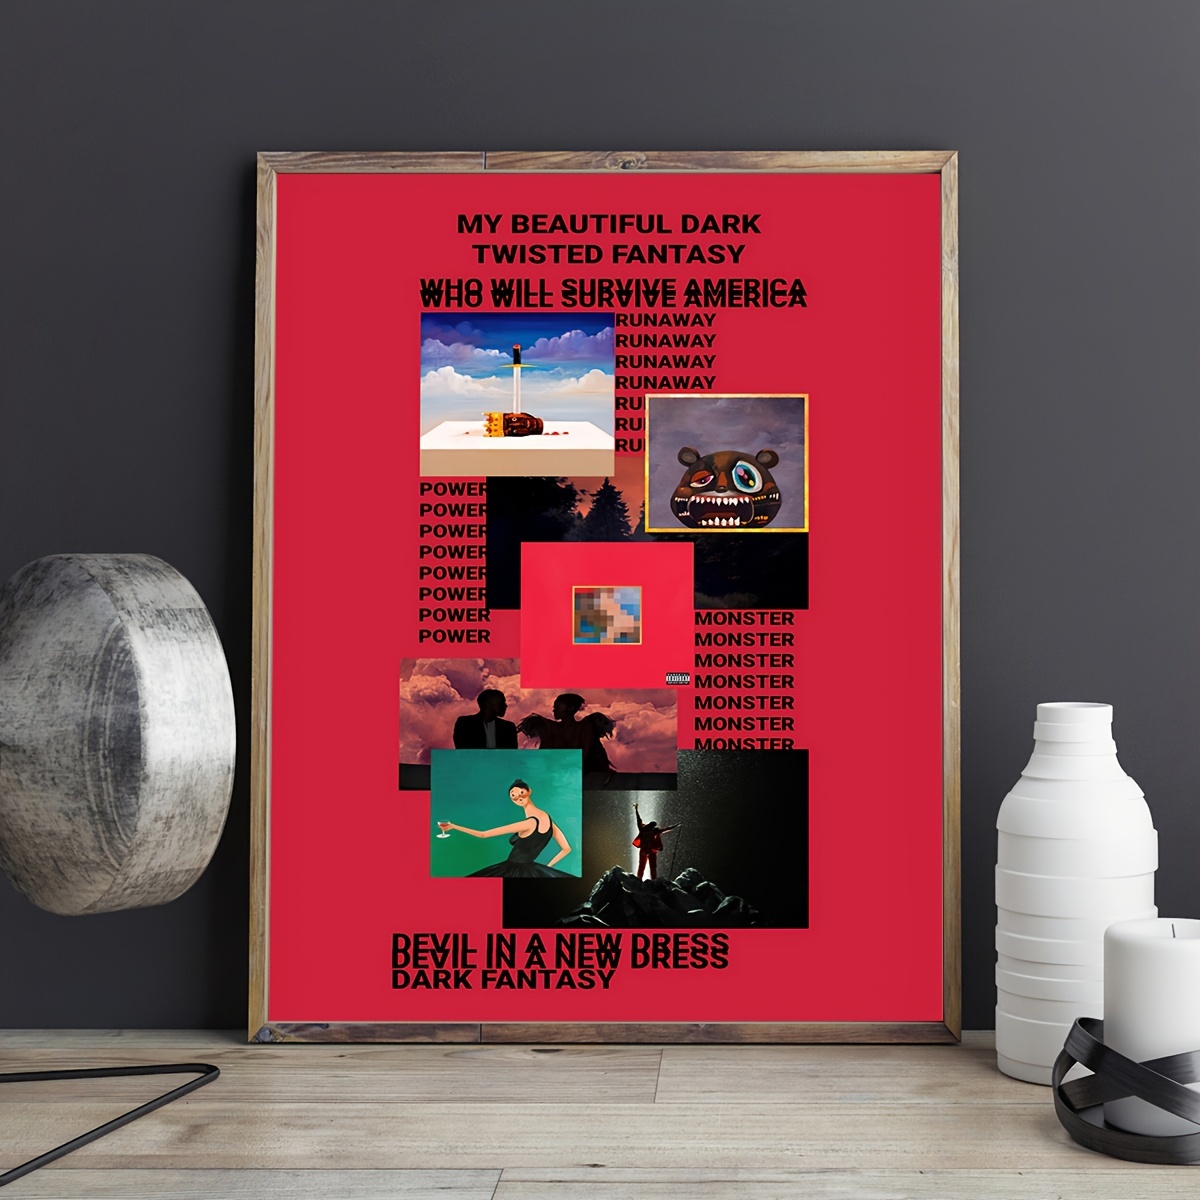 Kanye West GRADUATION Album Poster – rsdesignstudio